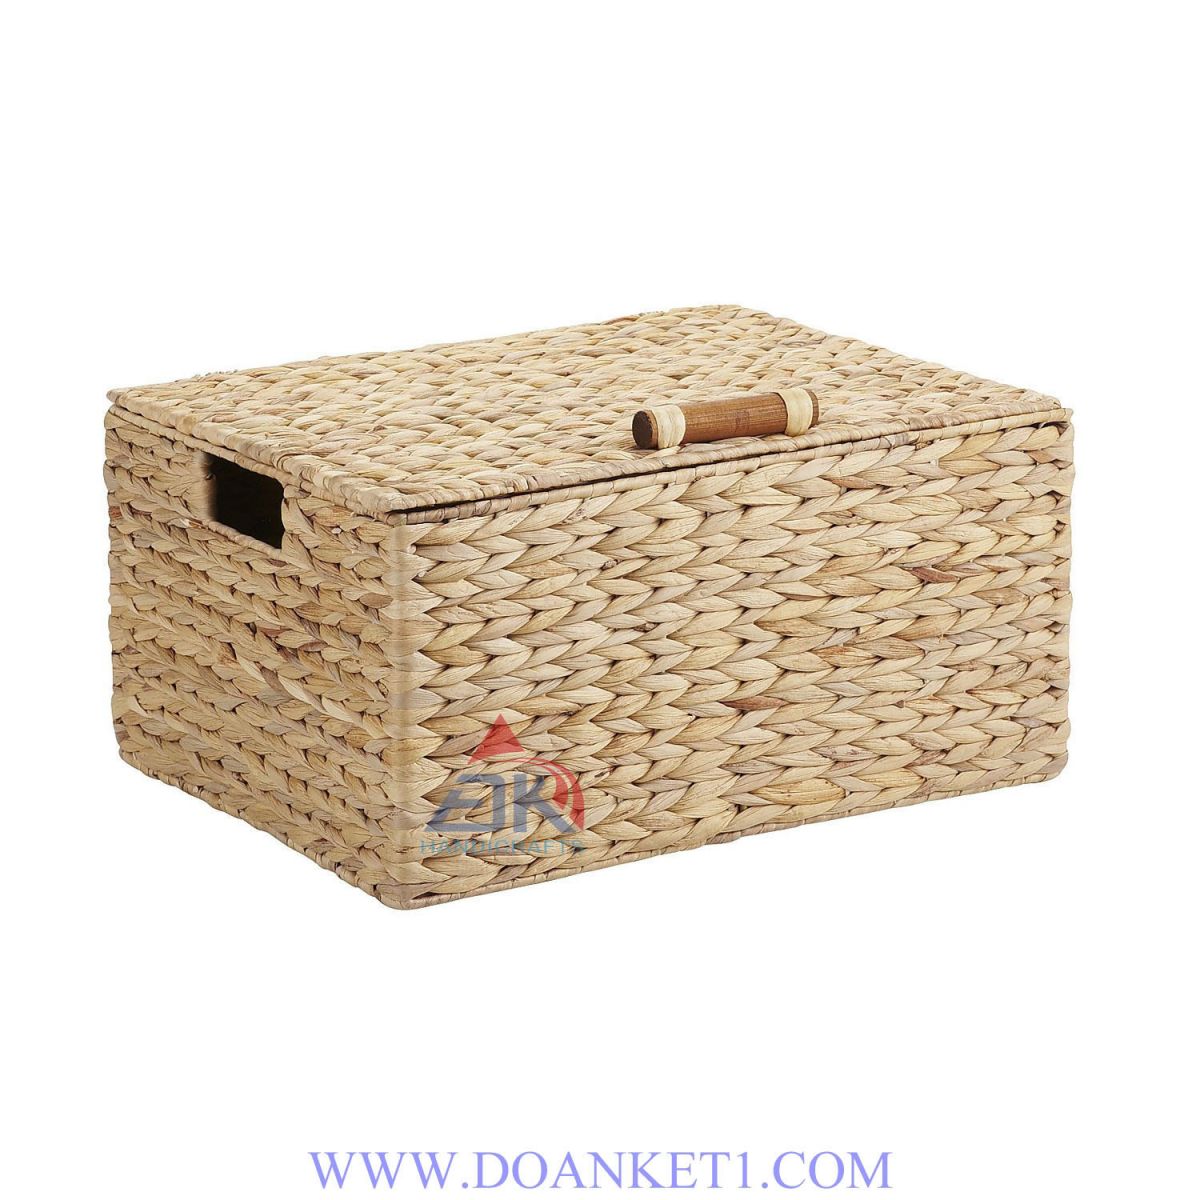 Water Hyacinth Basket With Lid # DK274